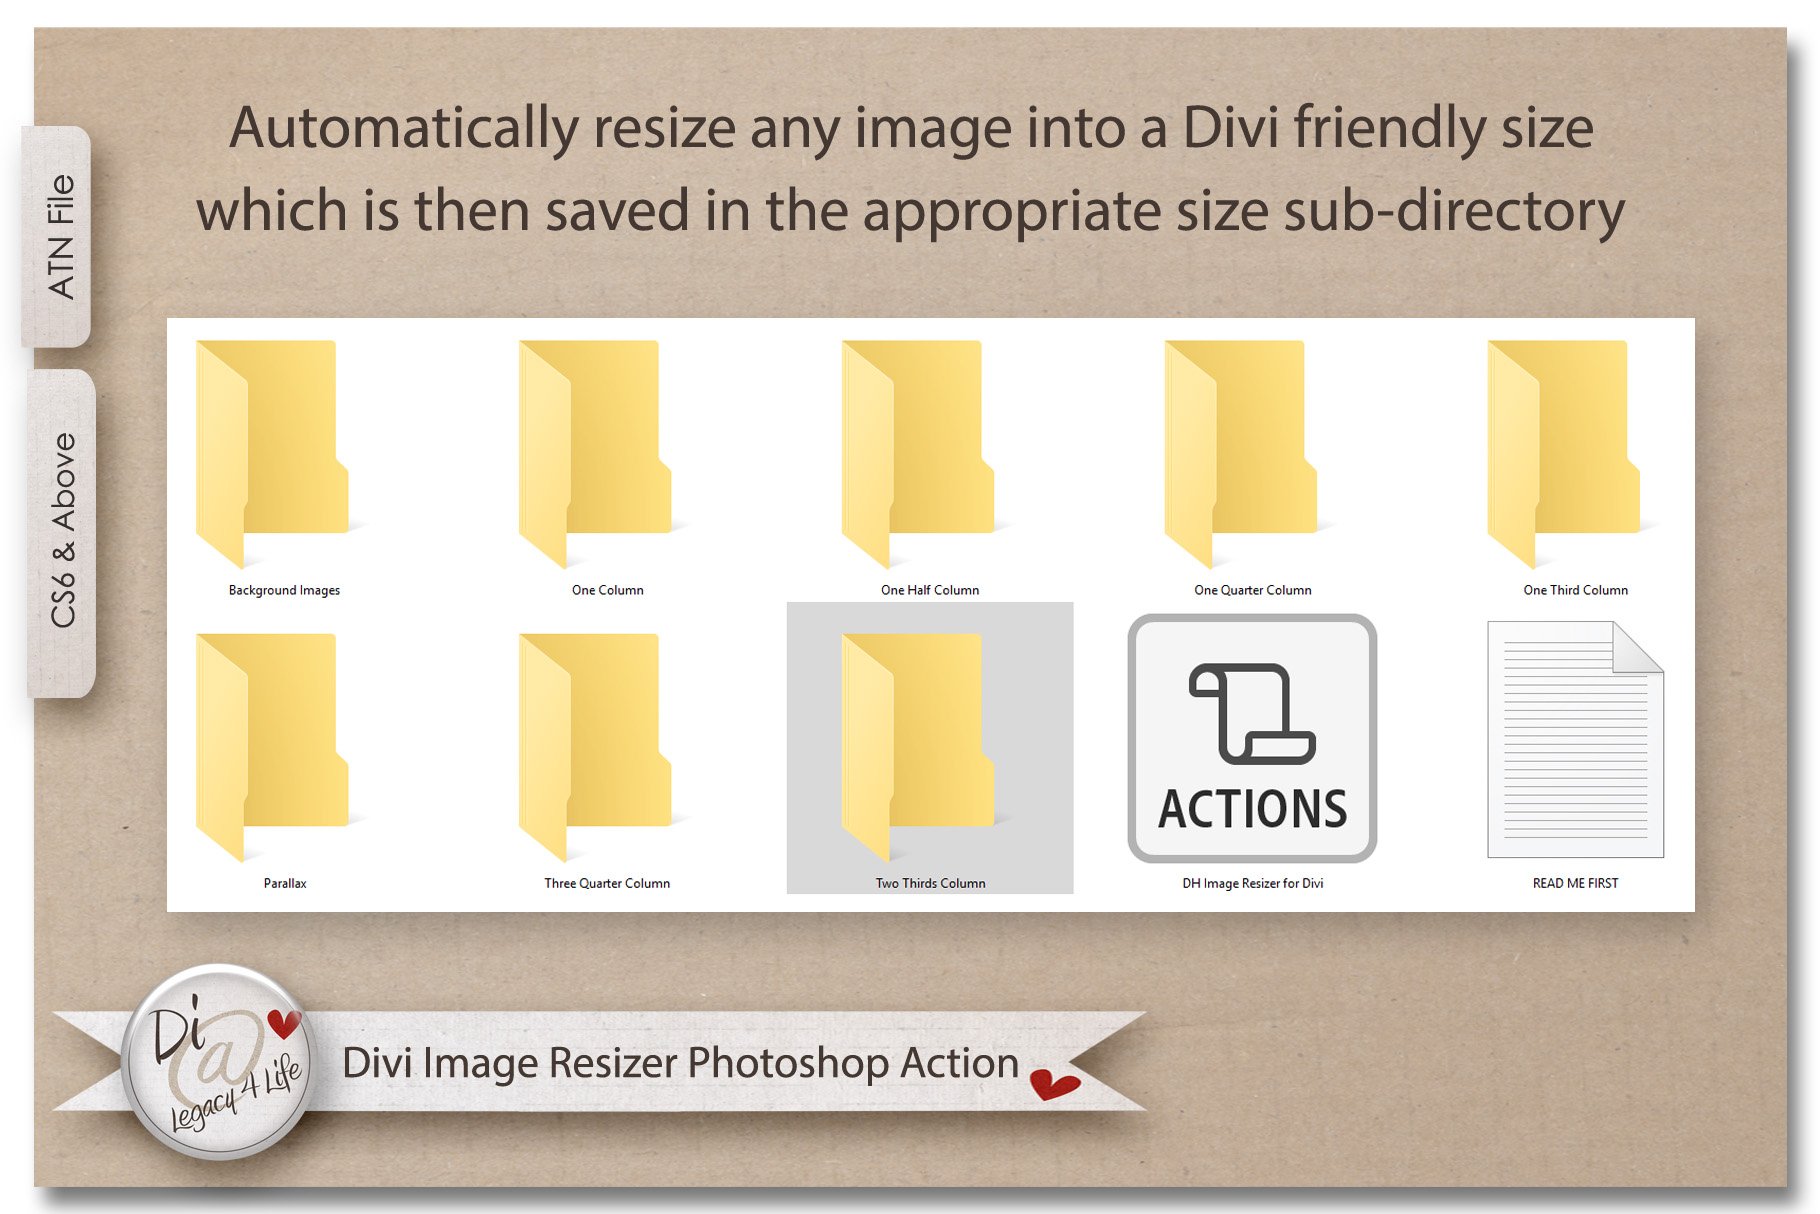 Divi Image Resizer Photoshop Actionpreview image.